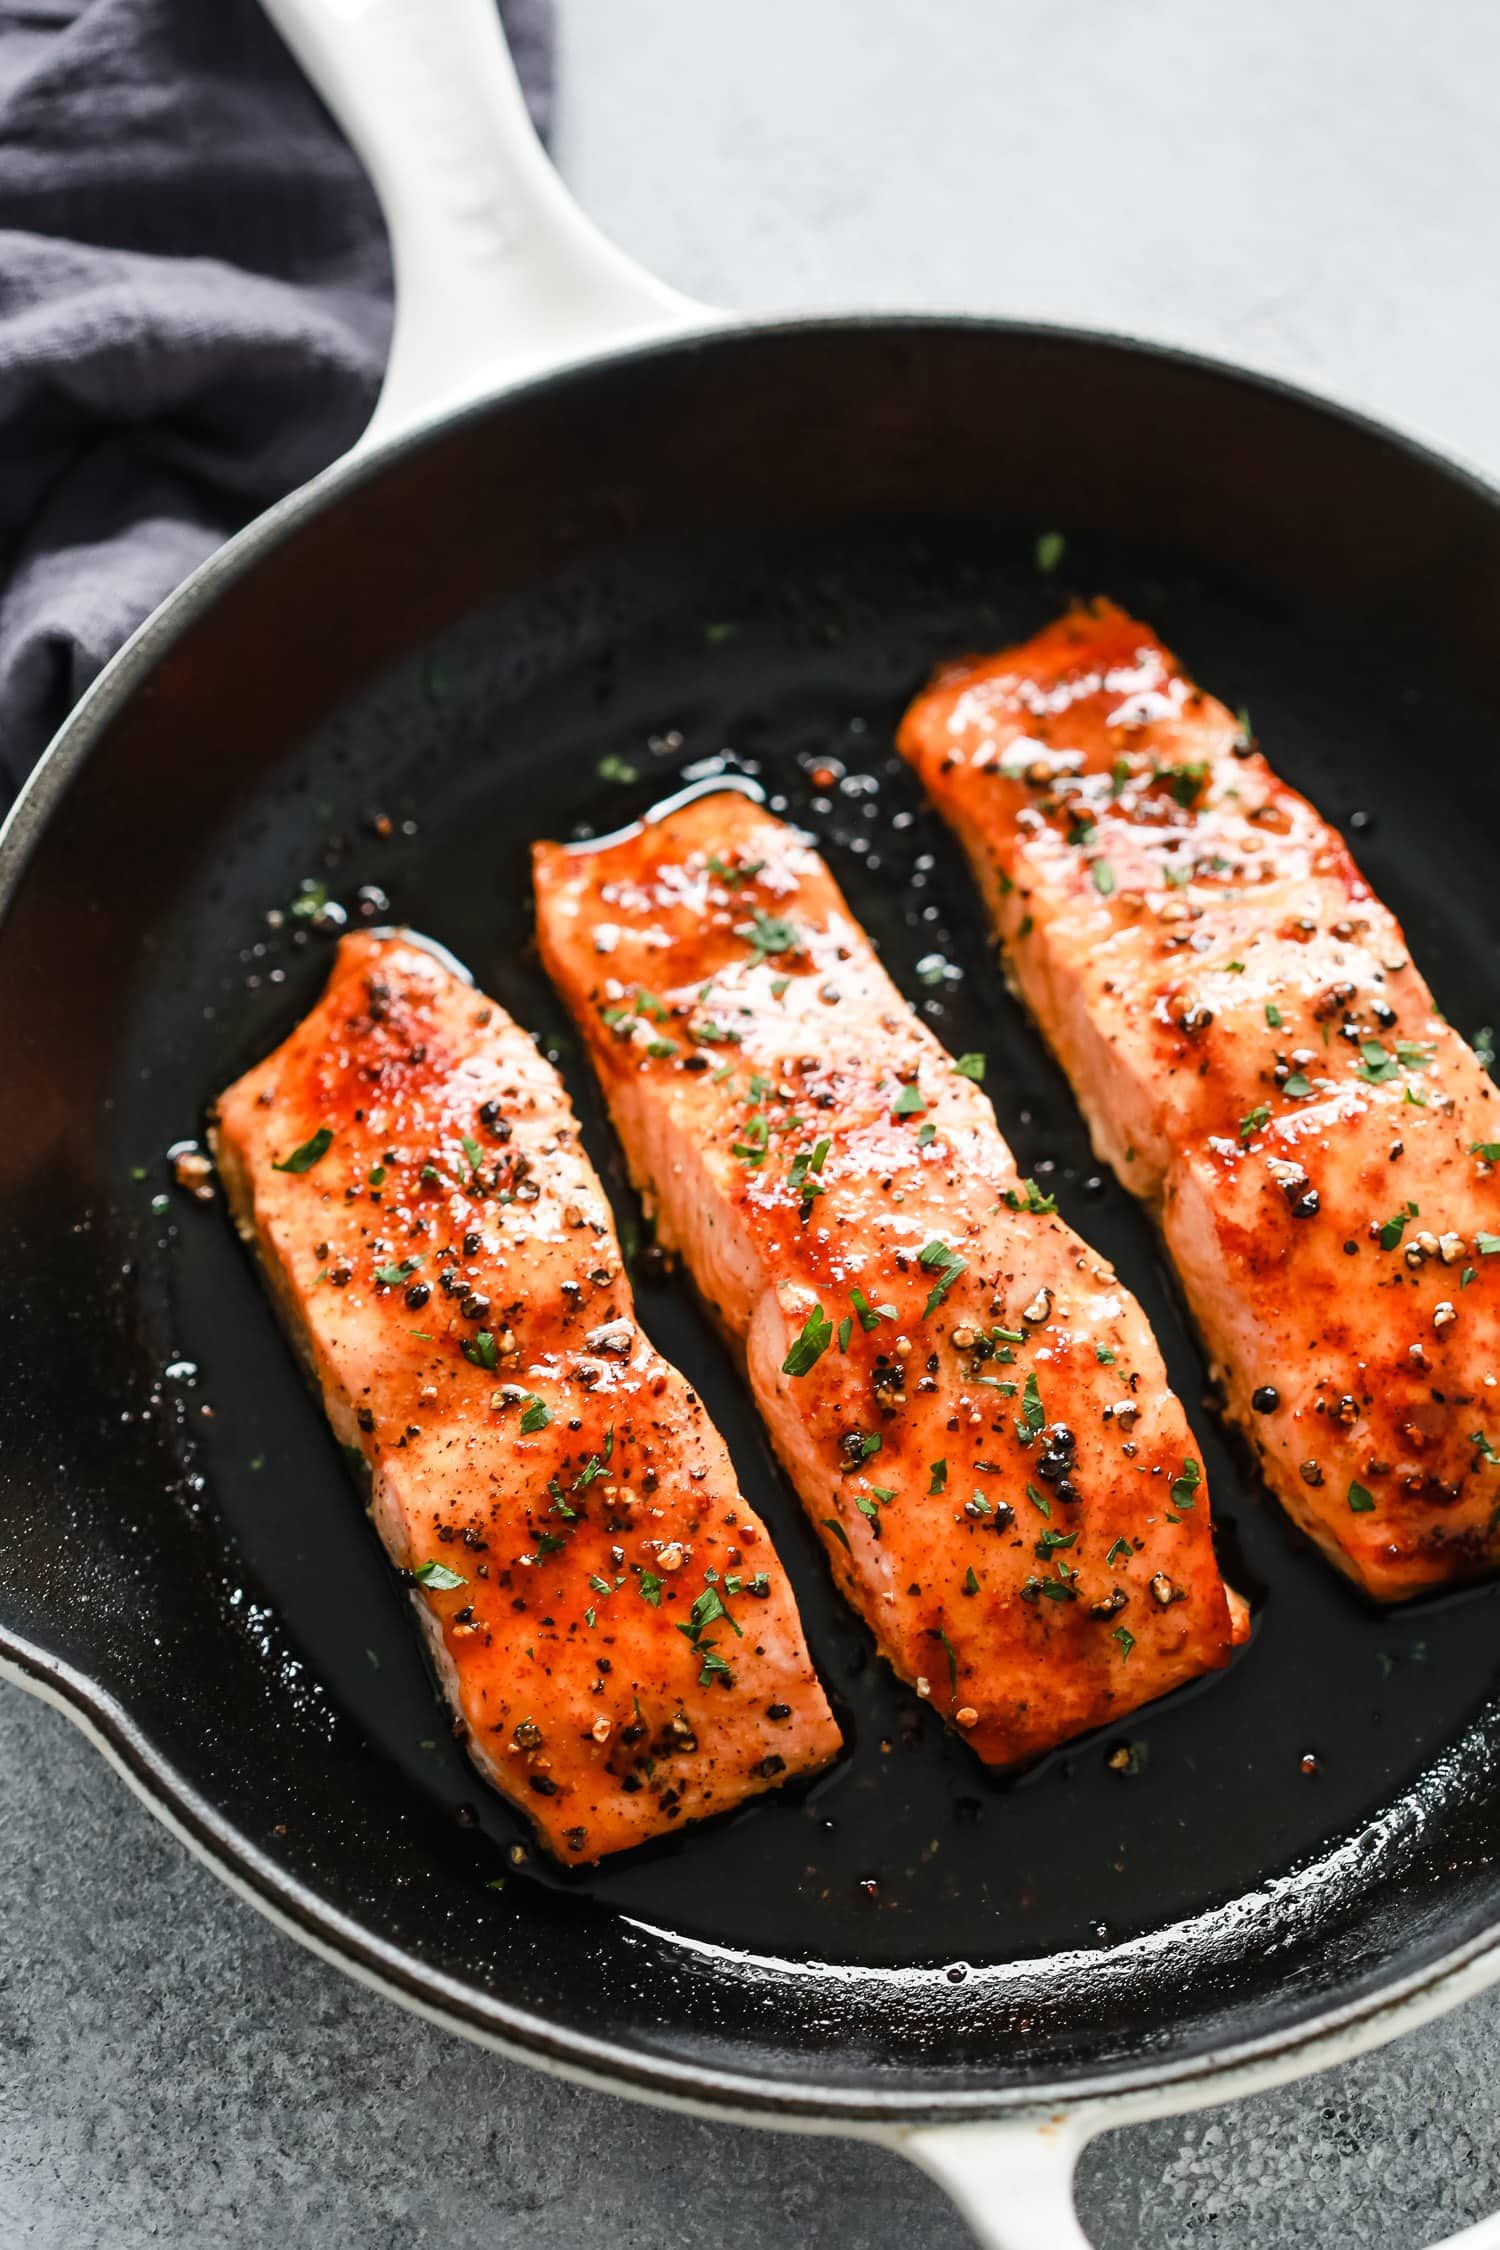 How Do I Cook Salmon